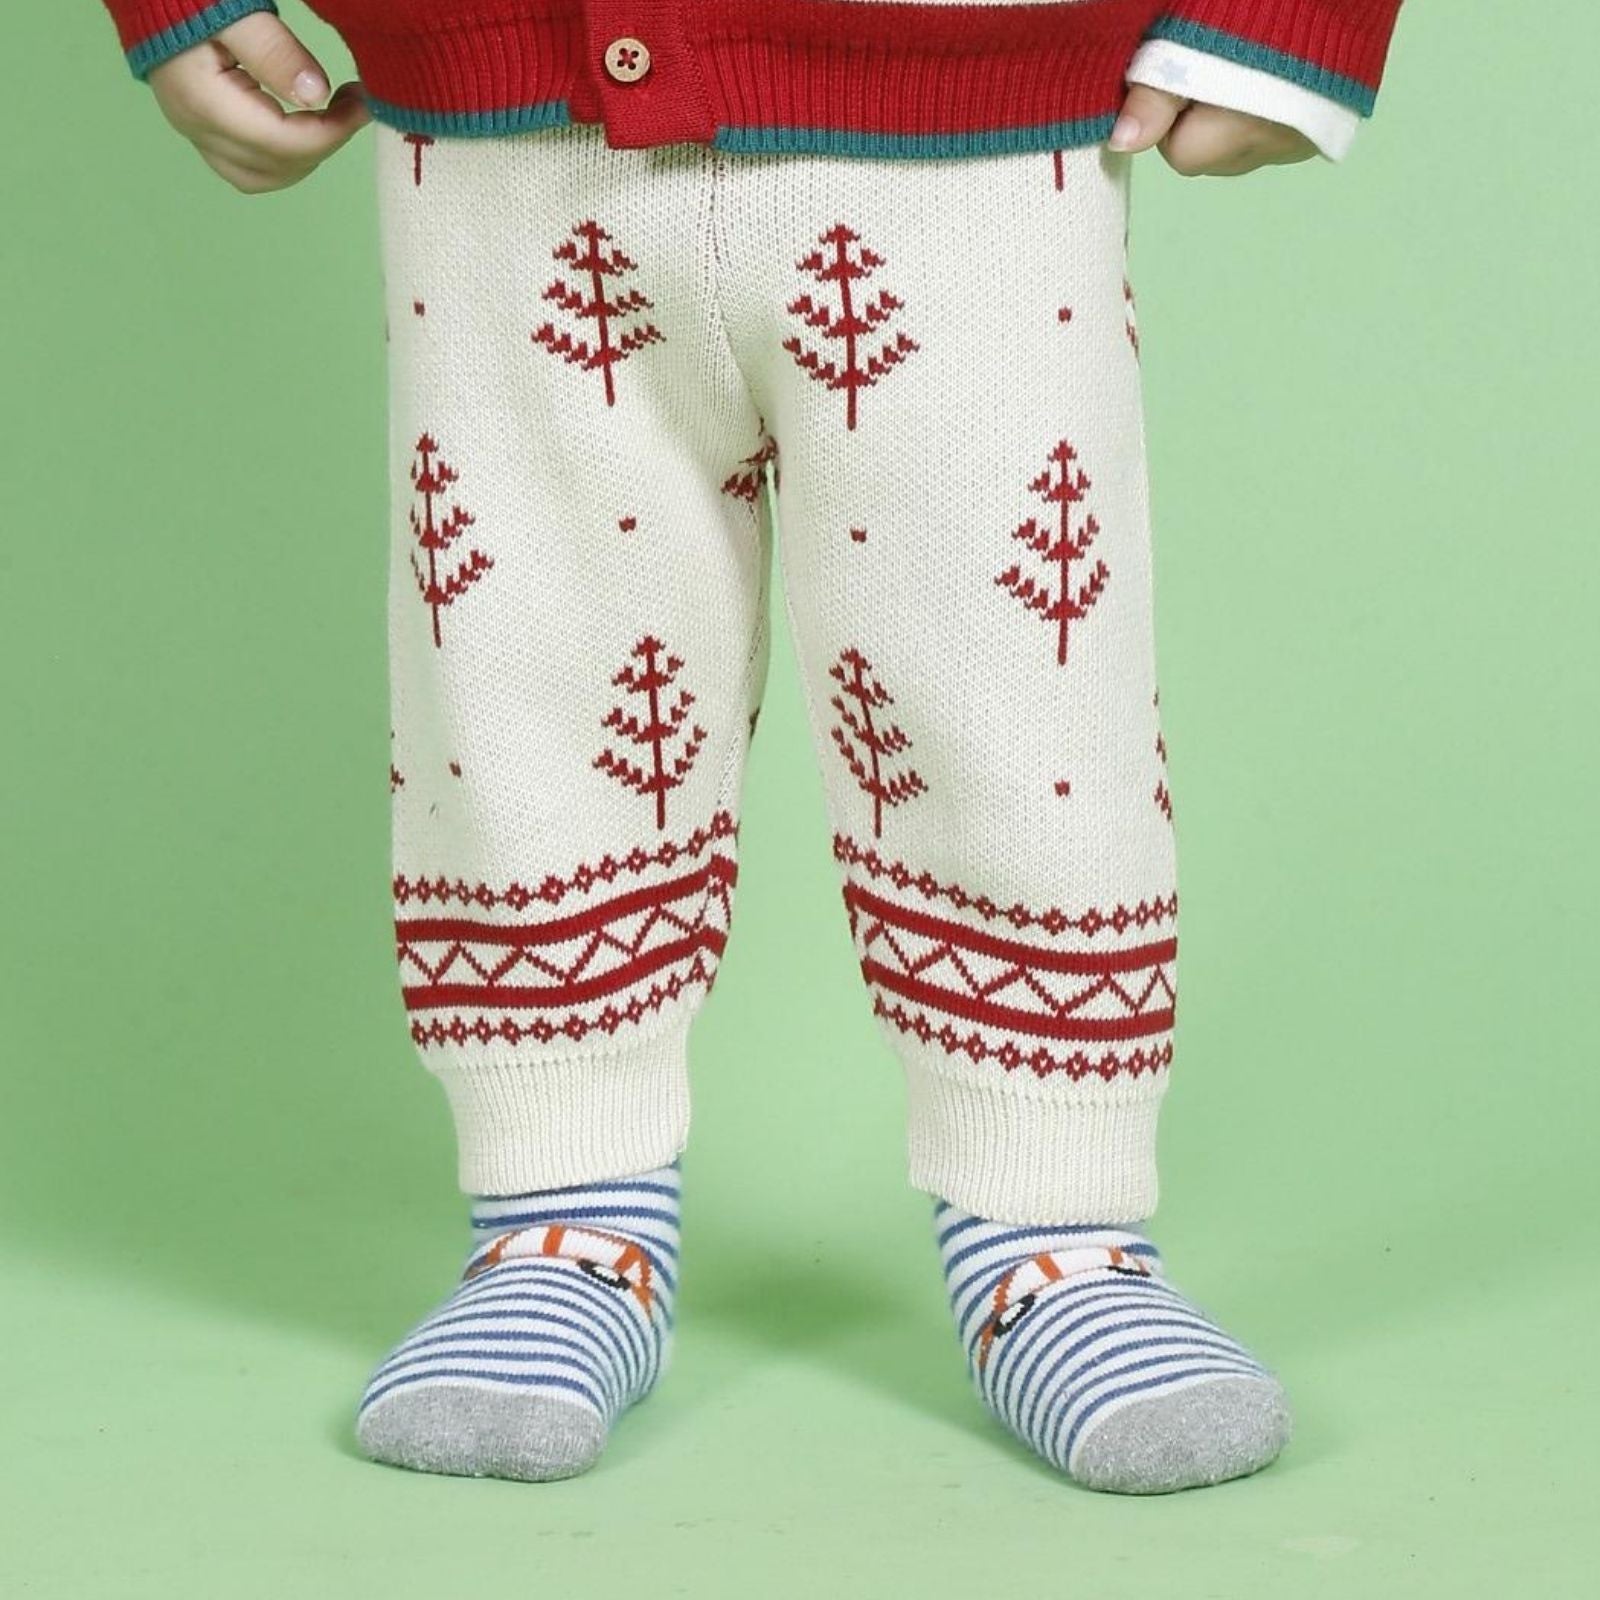 Greendeer Jaunty Reindeer 100% Cotton Sweater with Lower Set of 4